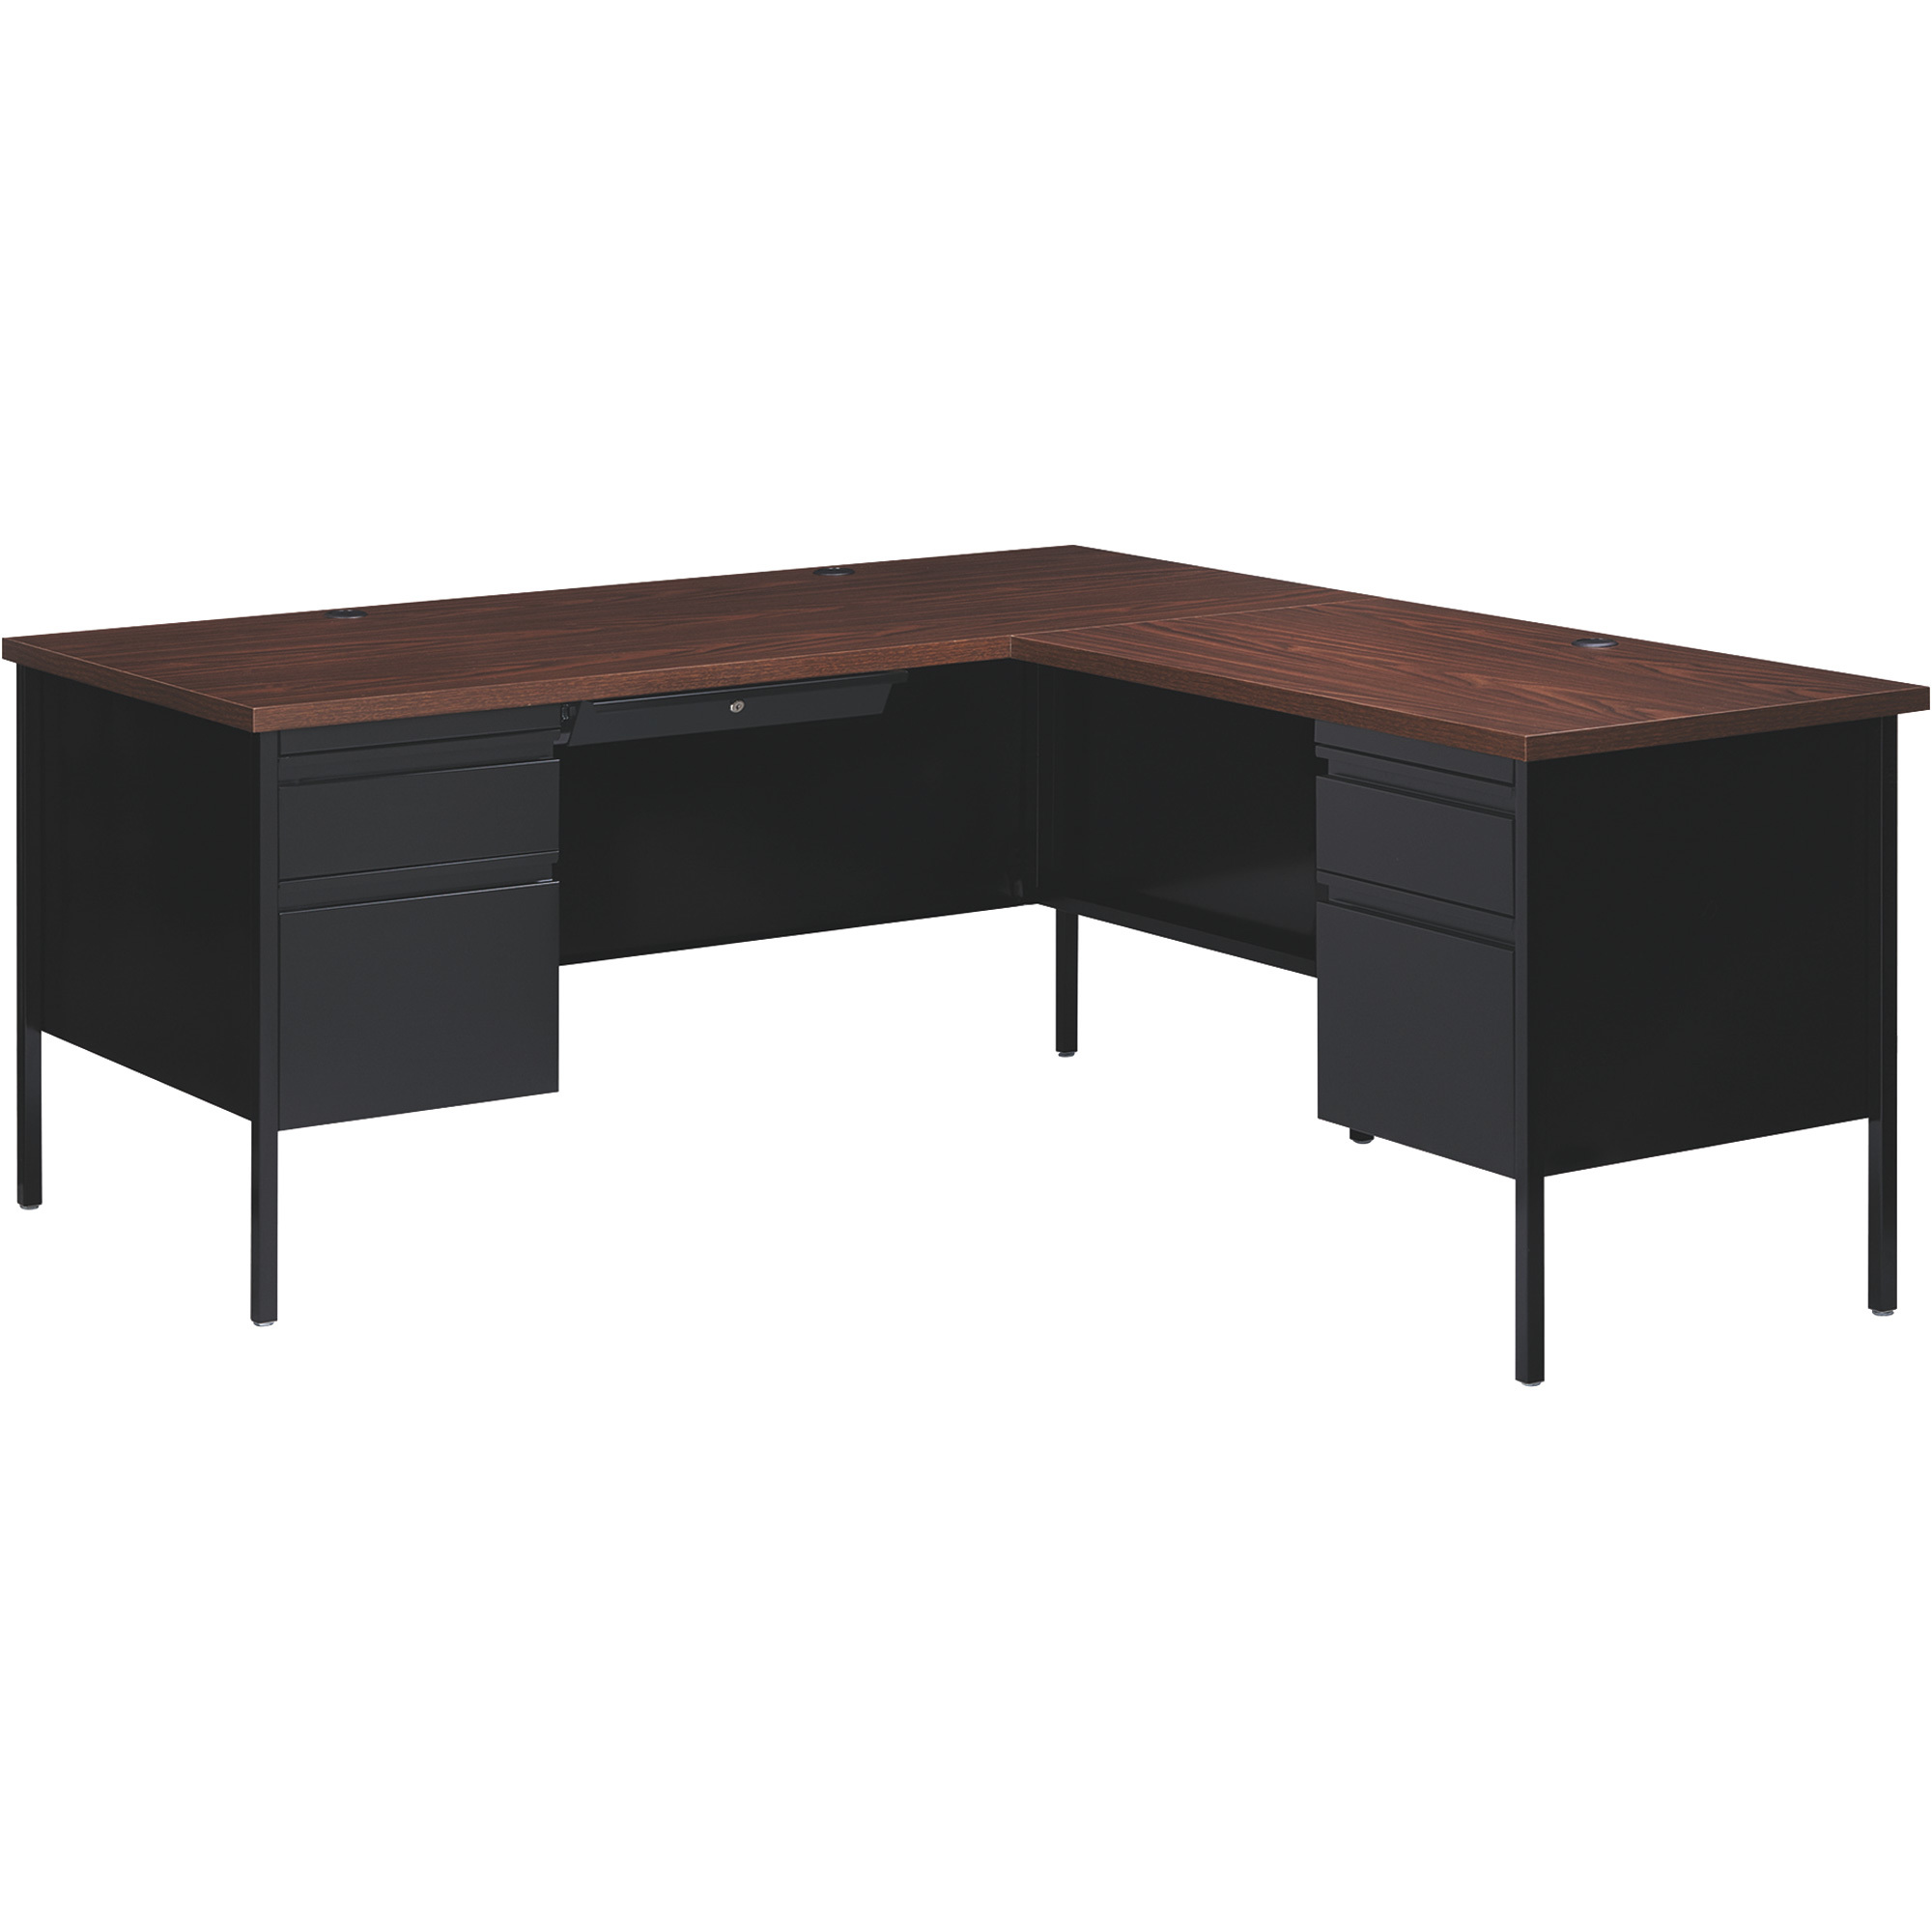 Hirsh Industries Right-Hand L-Shape Desk â Black/Walnut, 66Inch W x 72Inch D x 29 1/2Inch H, Model 20105